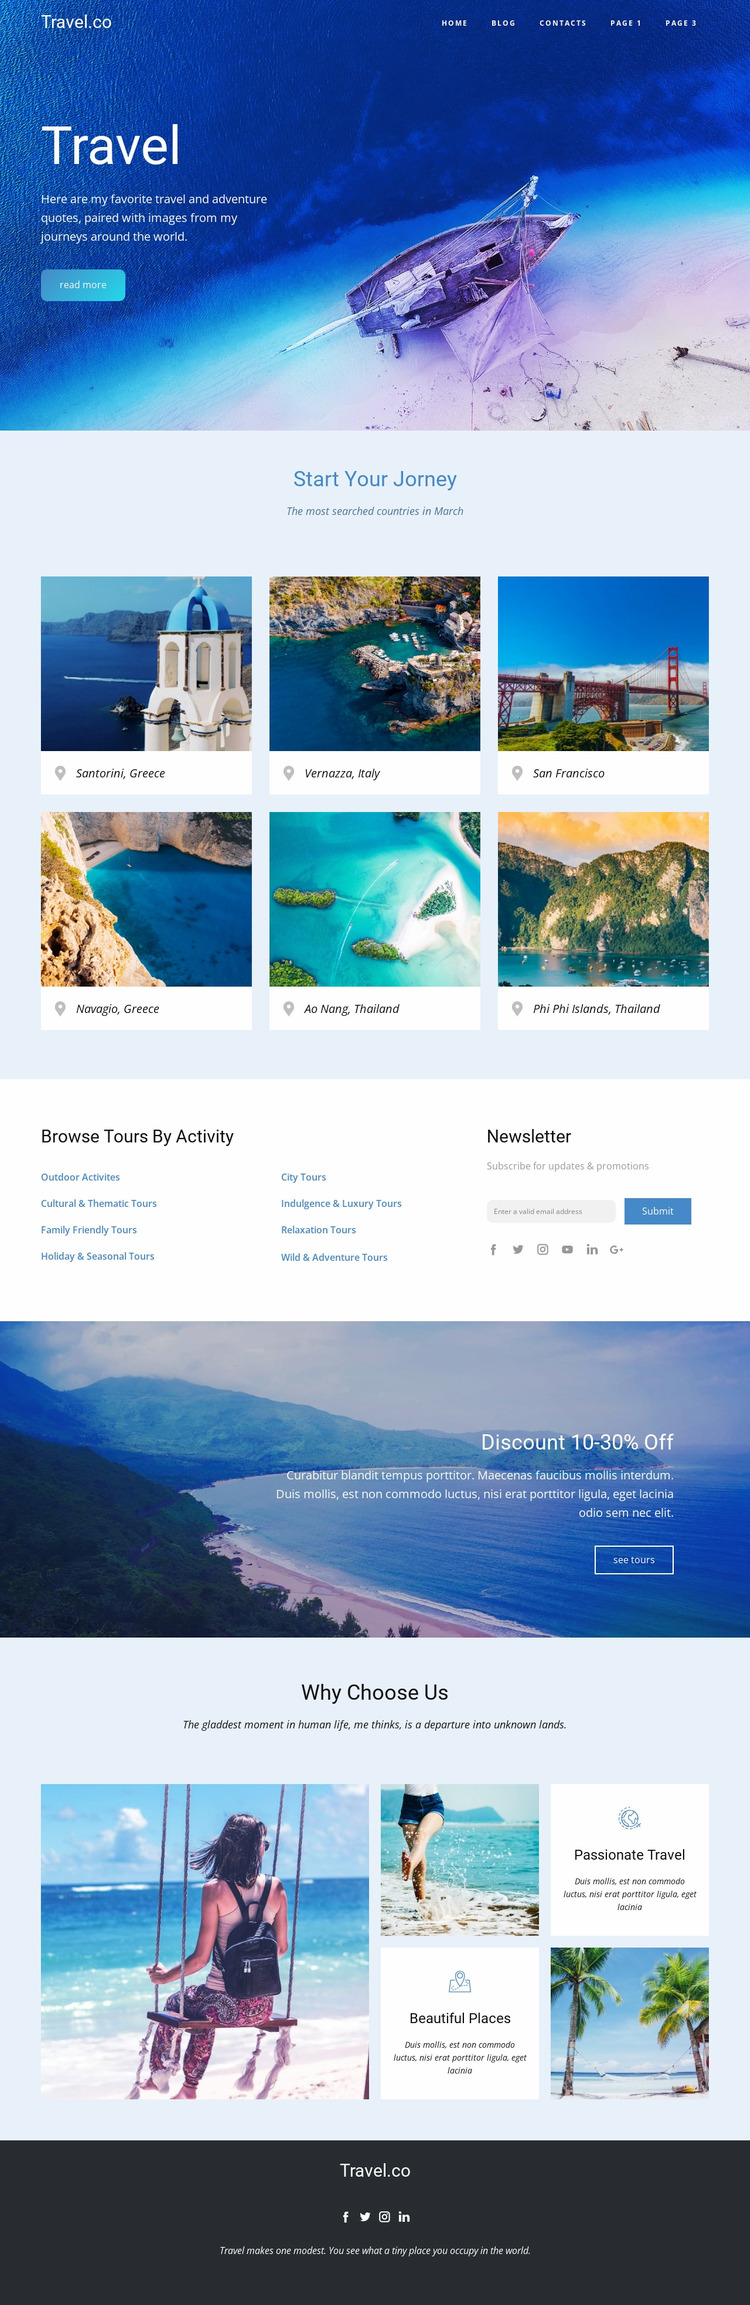 Amazing ideas for travel WordPress Website Builder